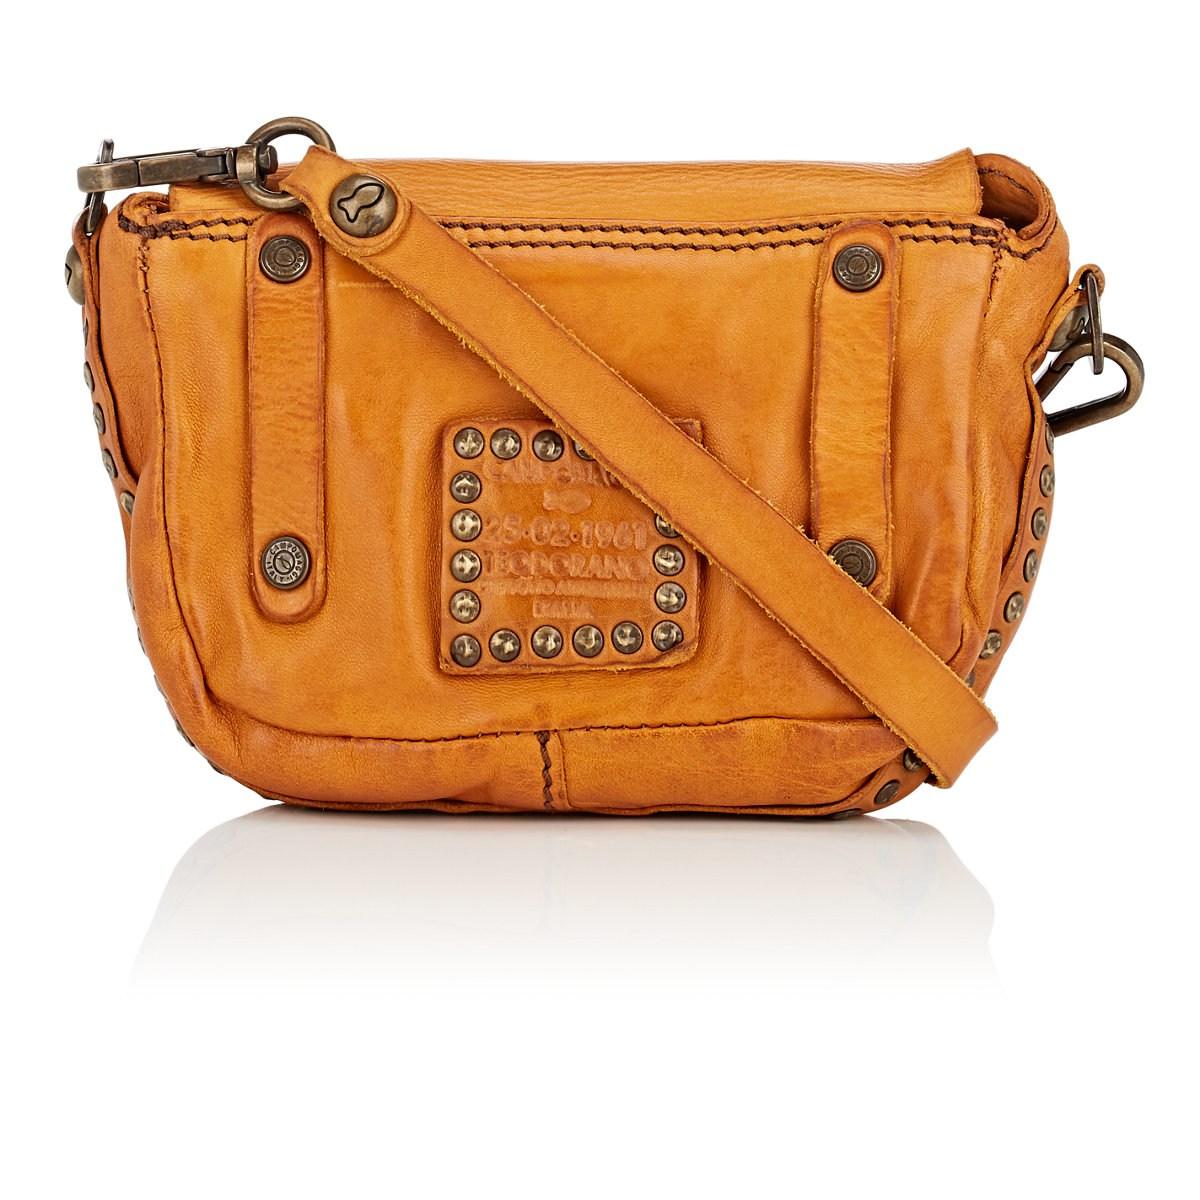 Campomaggi Micro Leather Crossbody Bag in Orange - Lyst